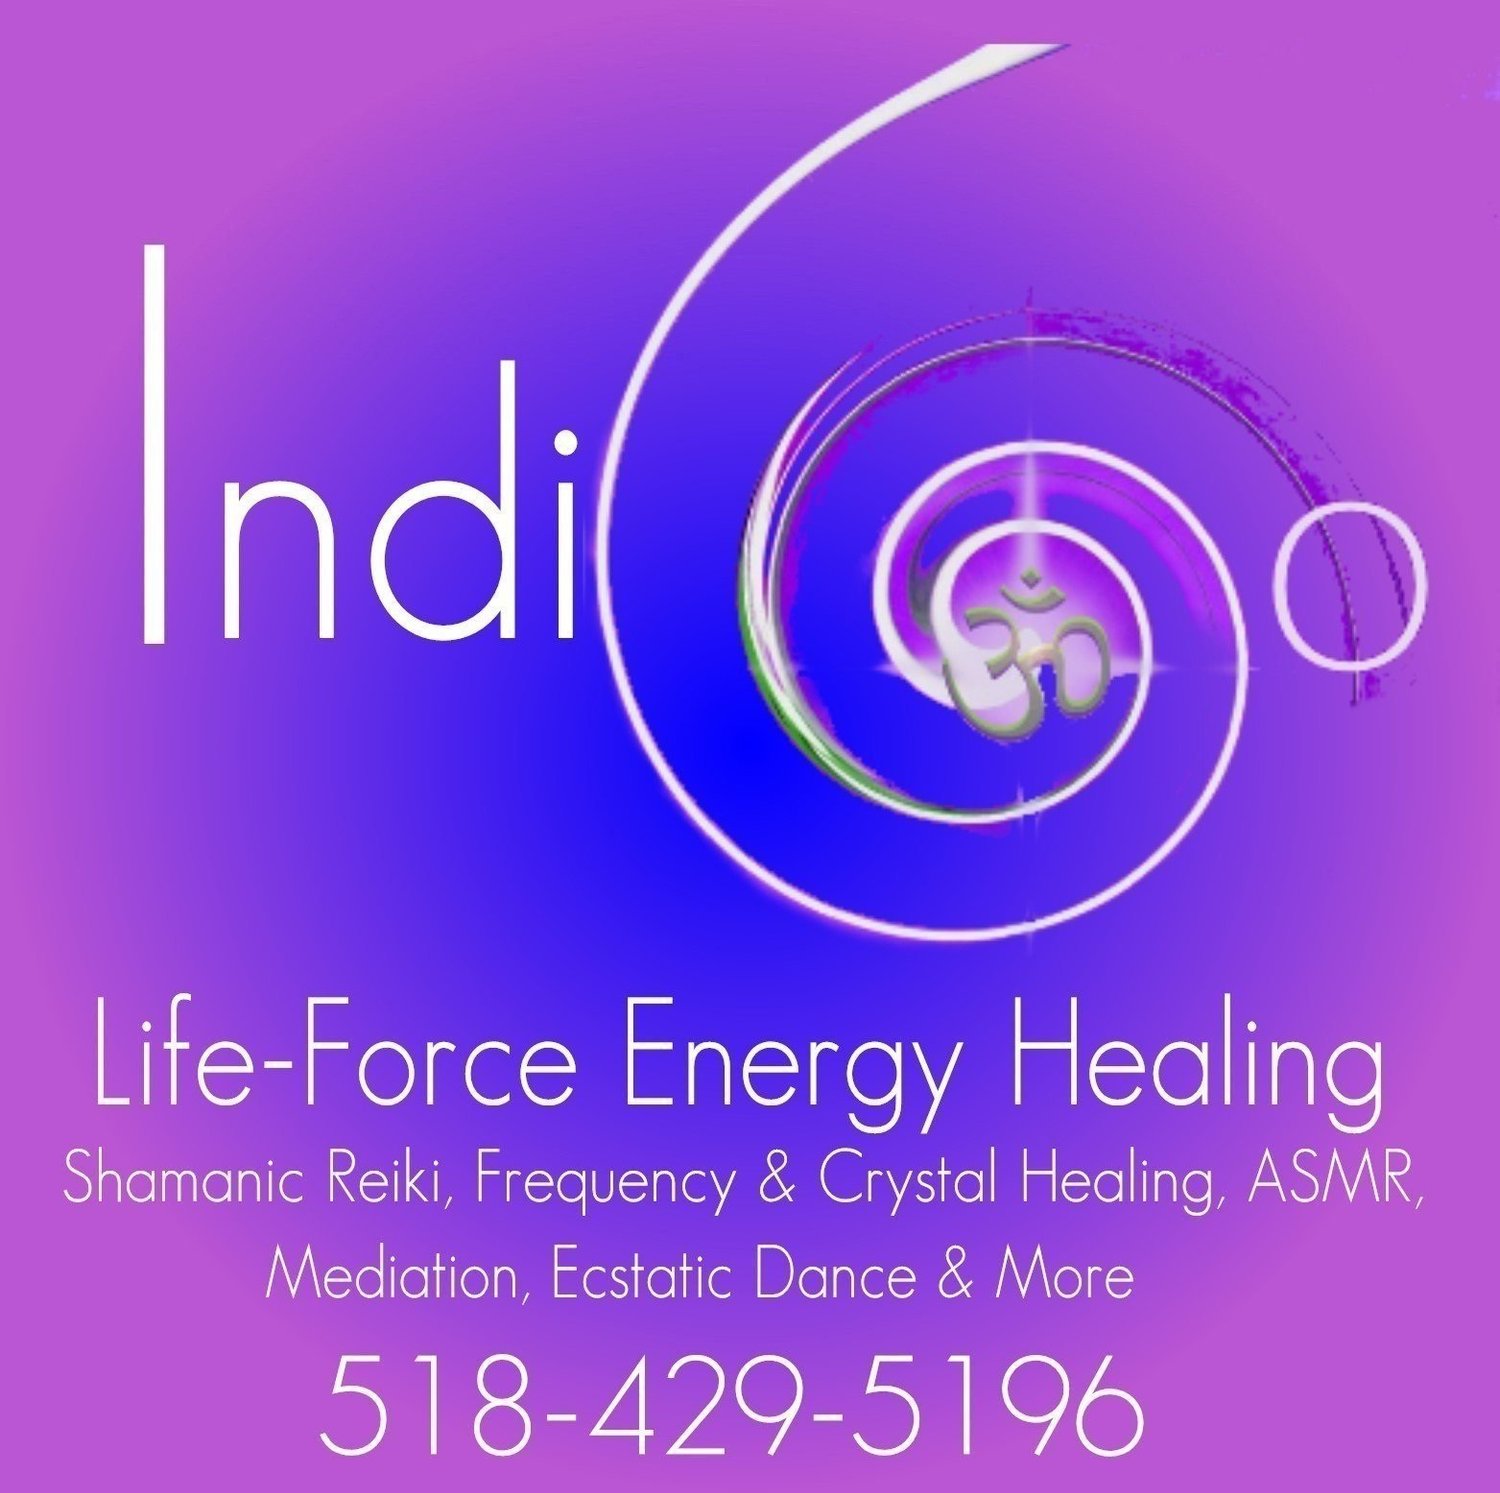 IndiGo- Life Force Energy Healing